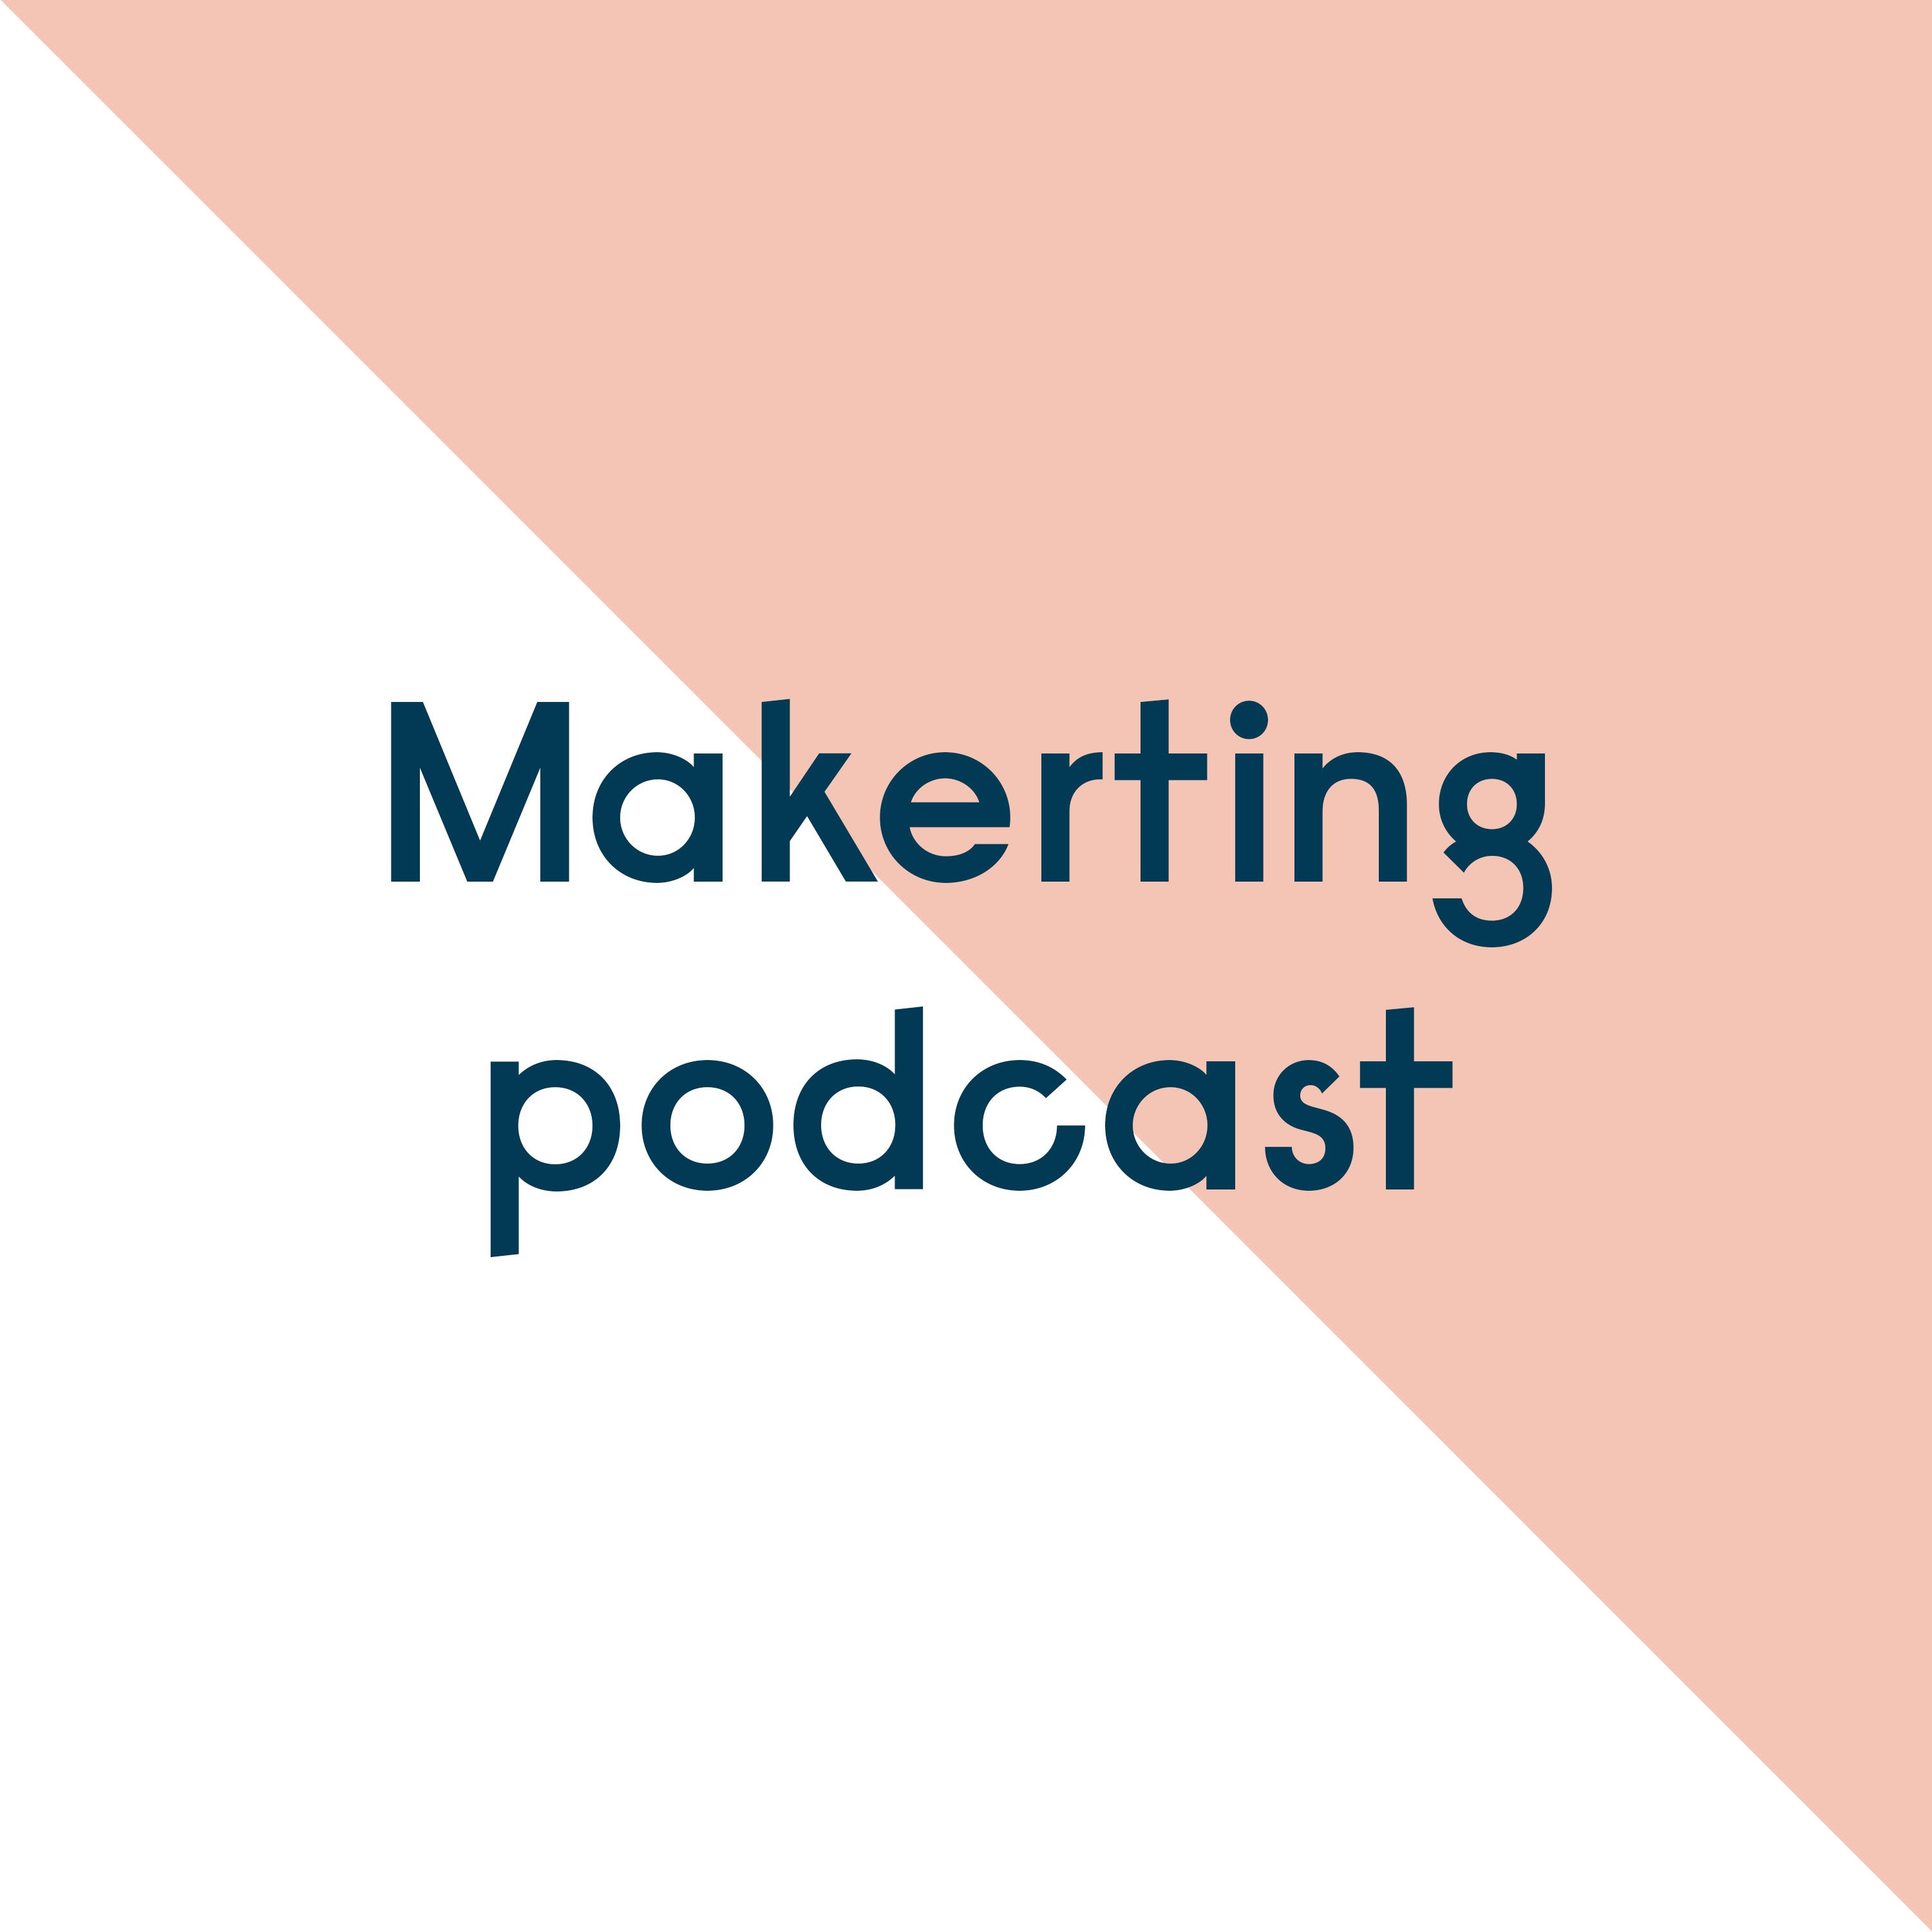 Makerting podcast